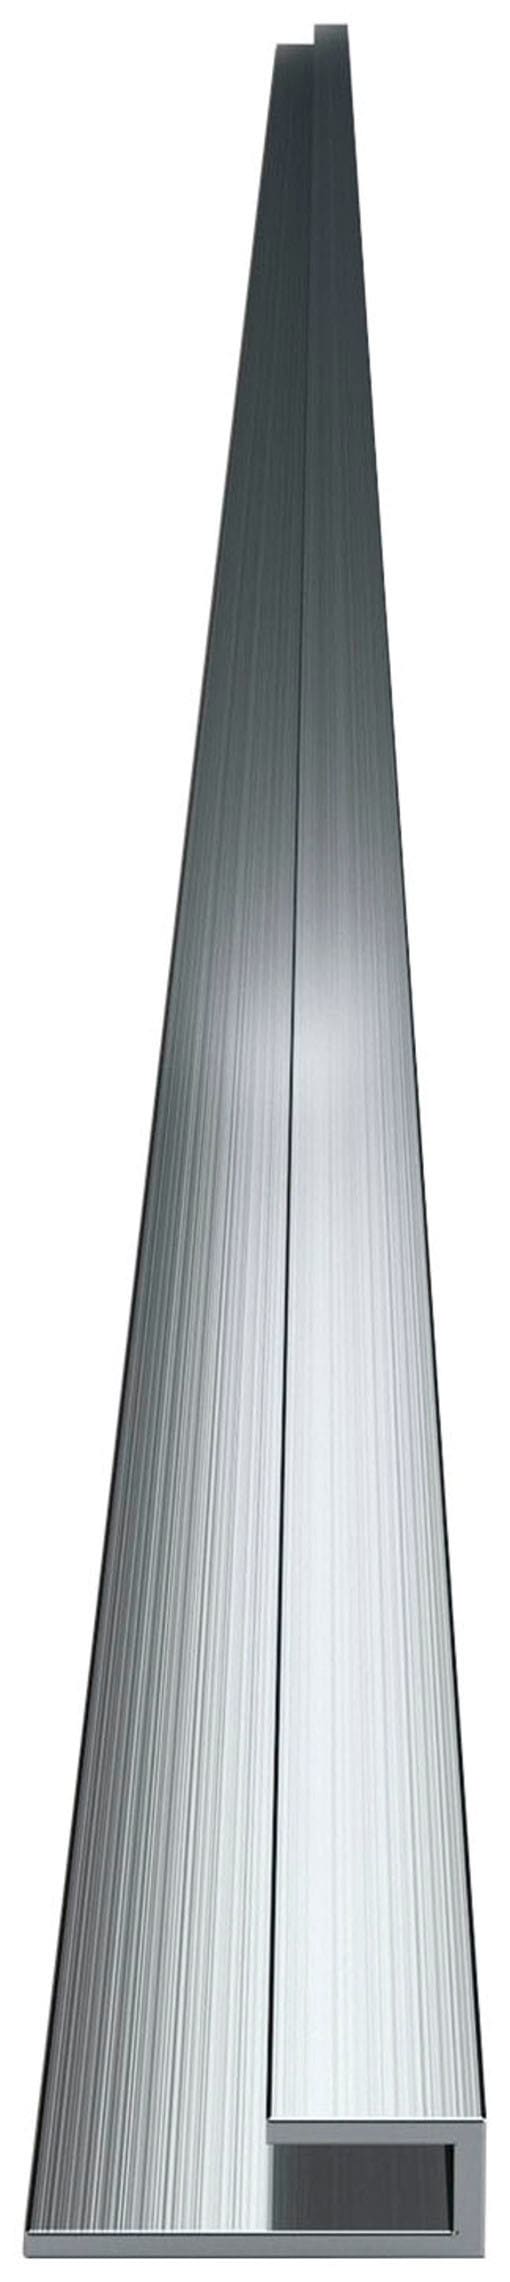 Abschlussprofil »Sanowall«, 255 cm